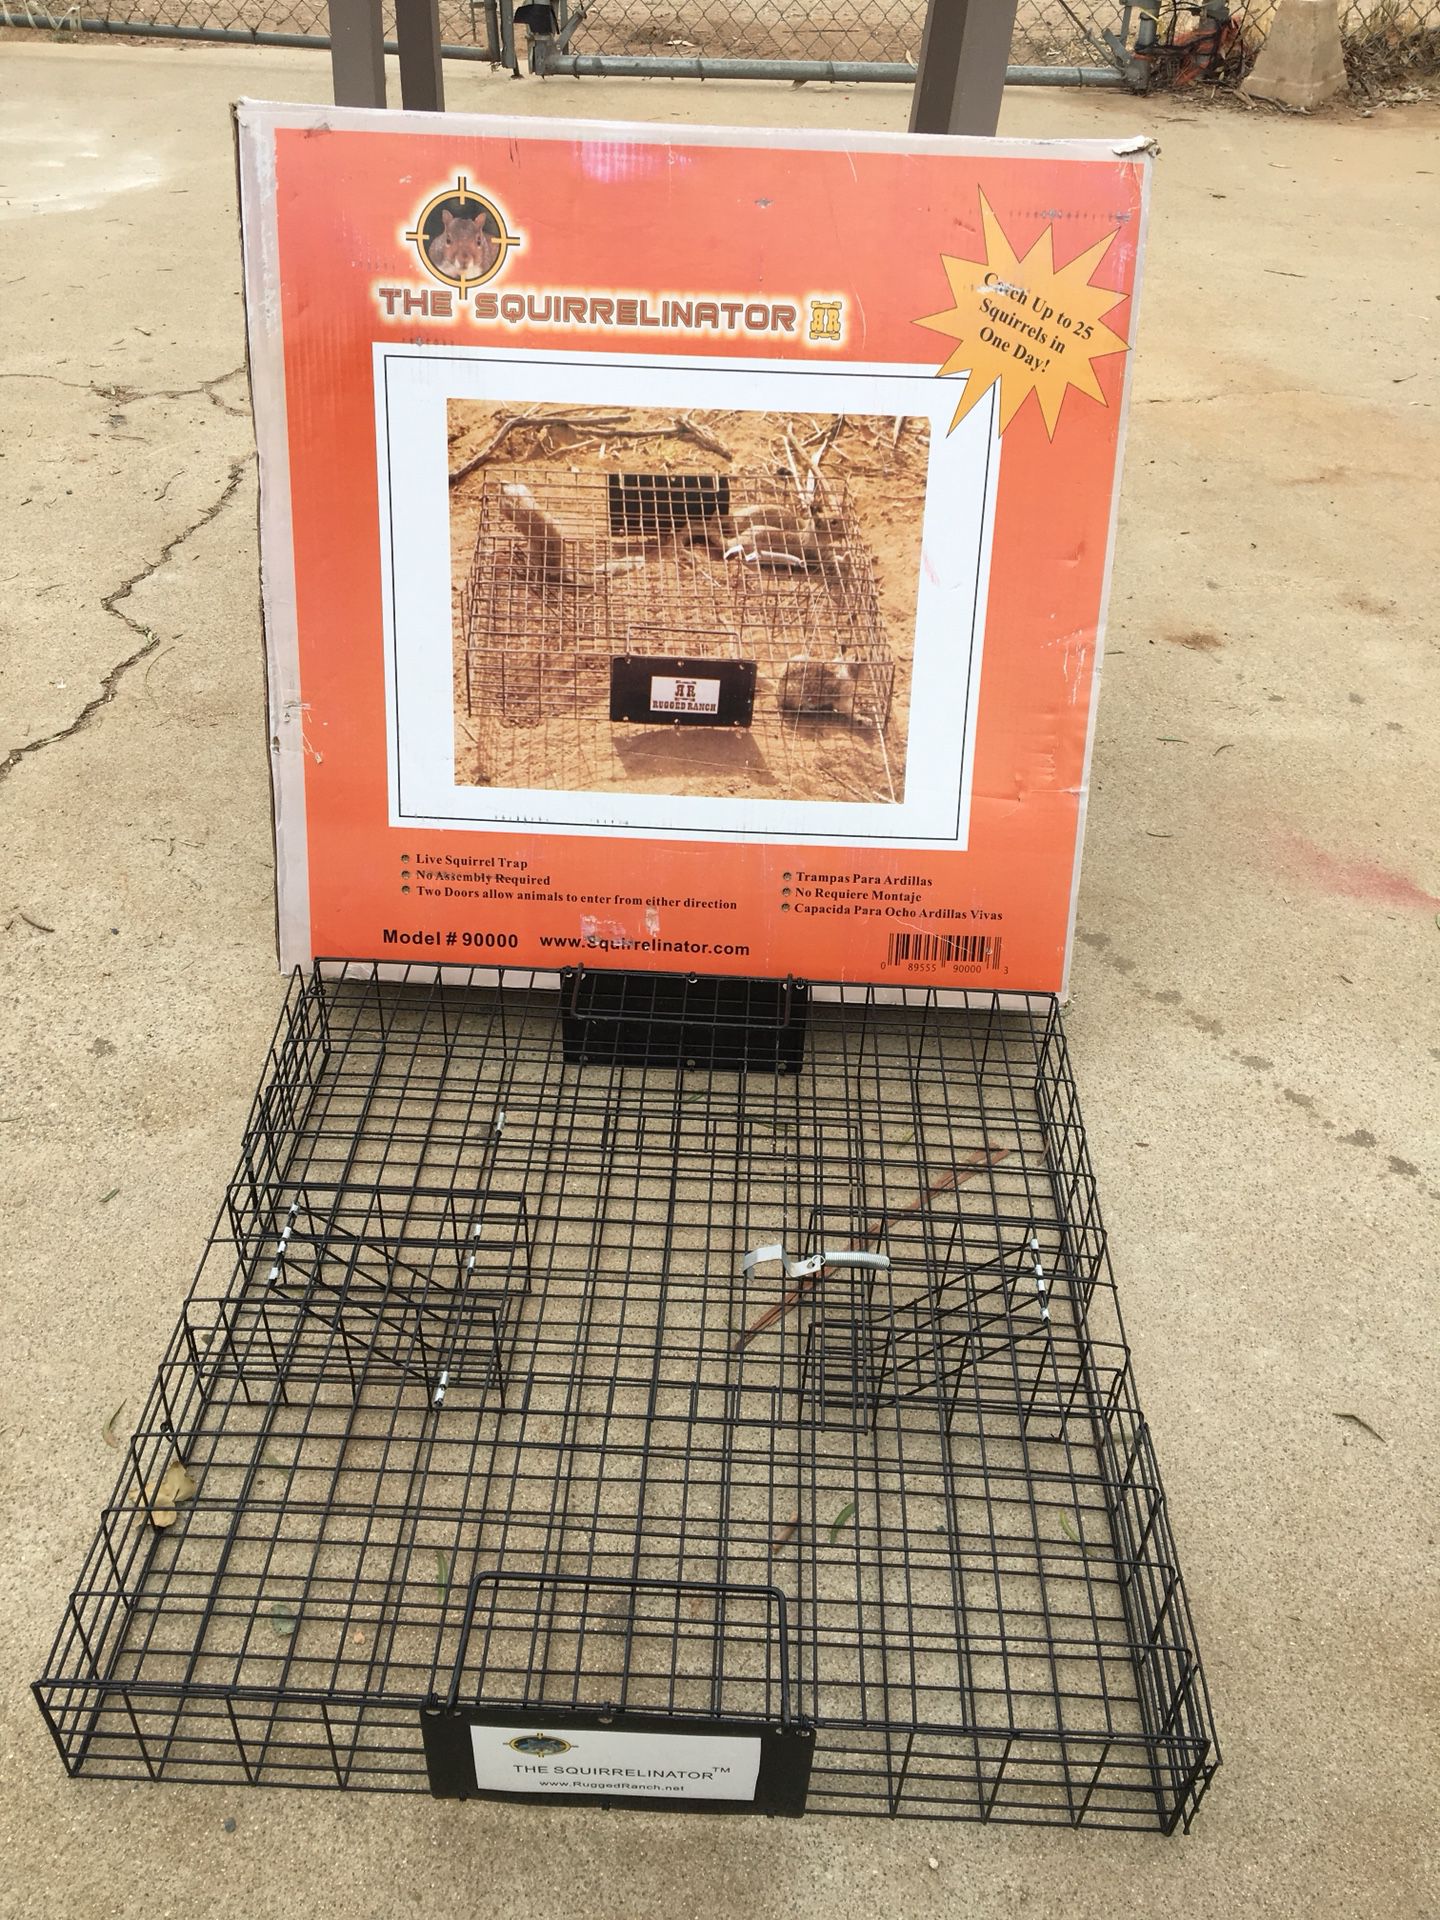 Squirrelinator live squirrel trap for Sale in Perris, CA - OfferUp